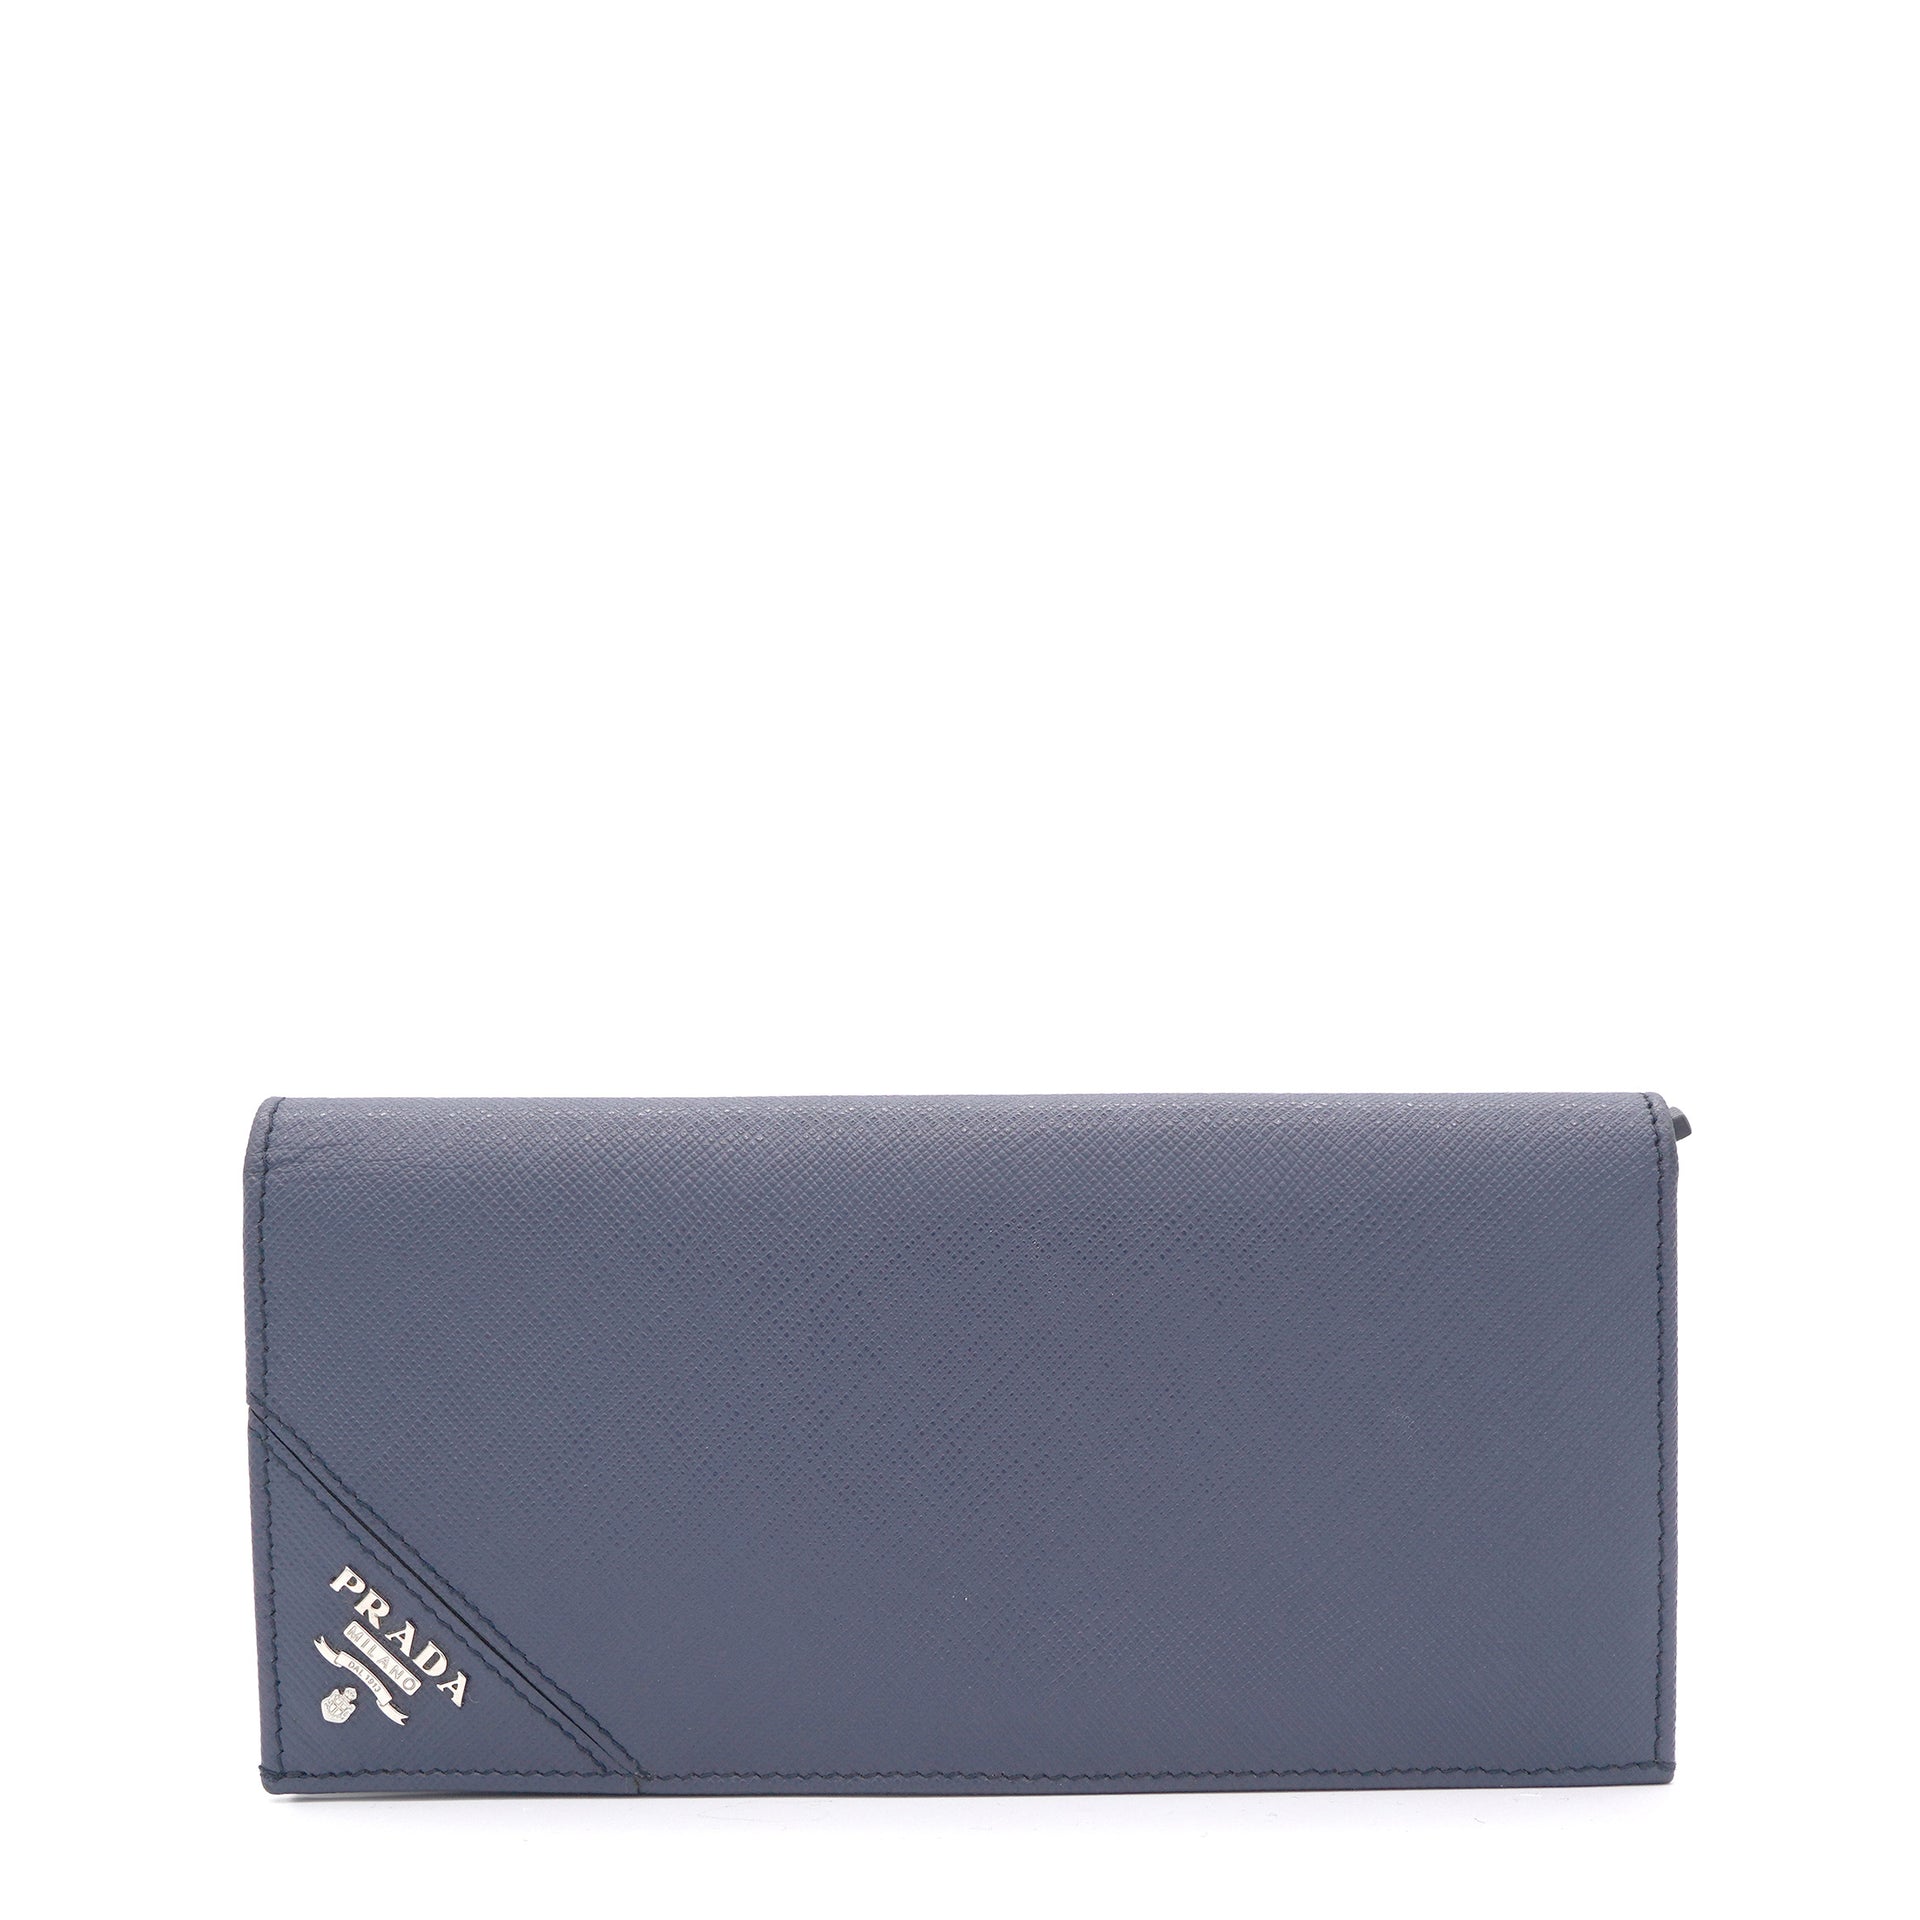 Prada Blue Saffiano Leather Bi-Fold Compact Wallet